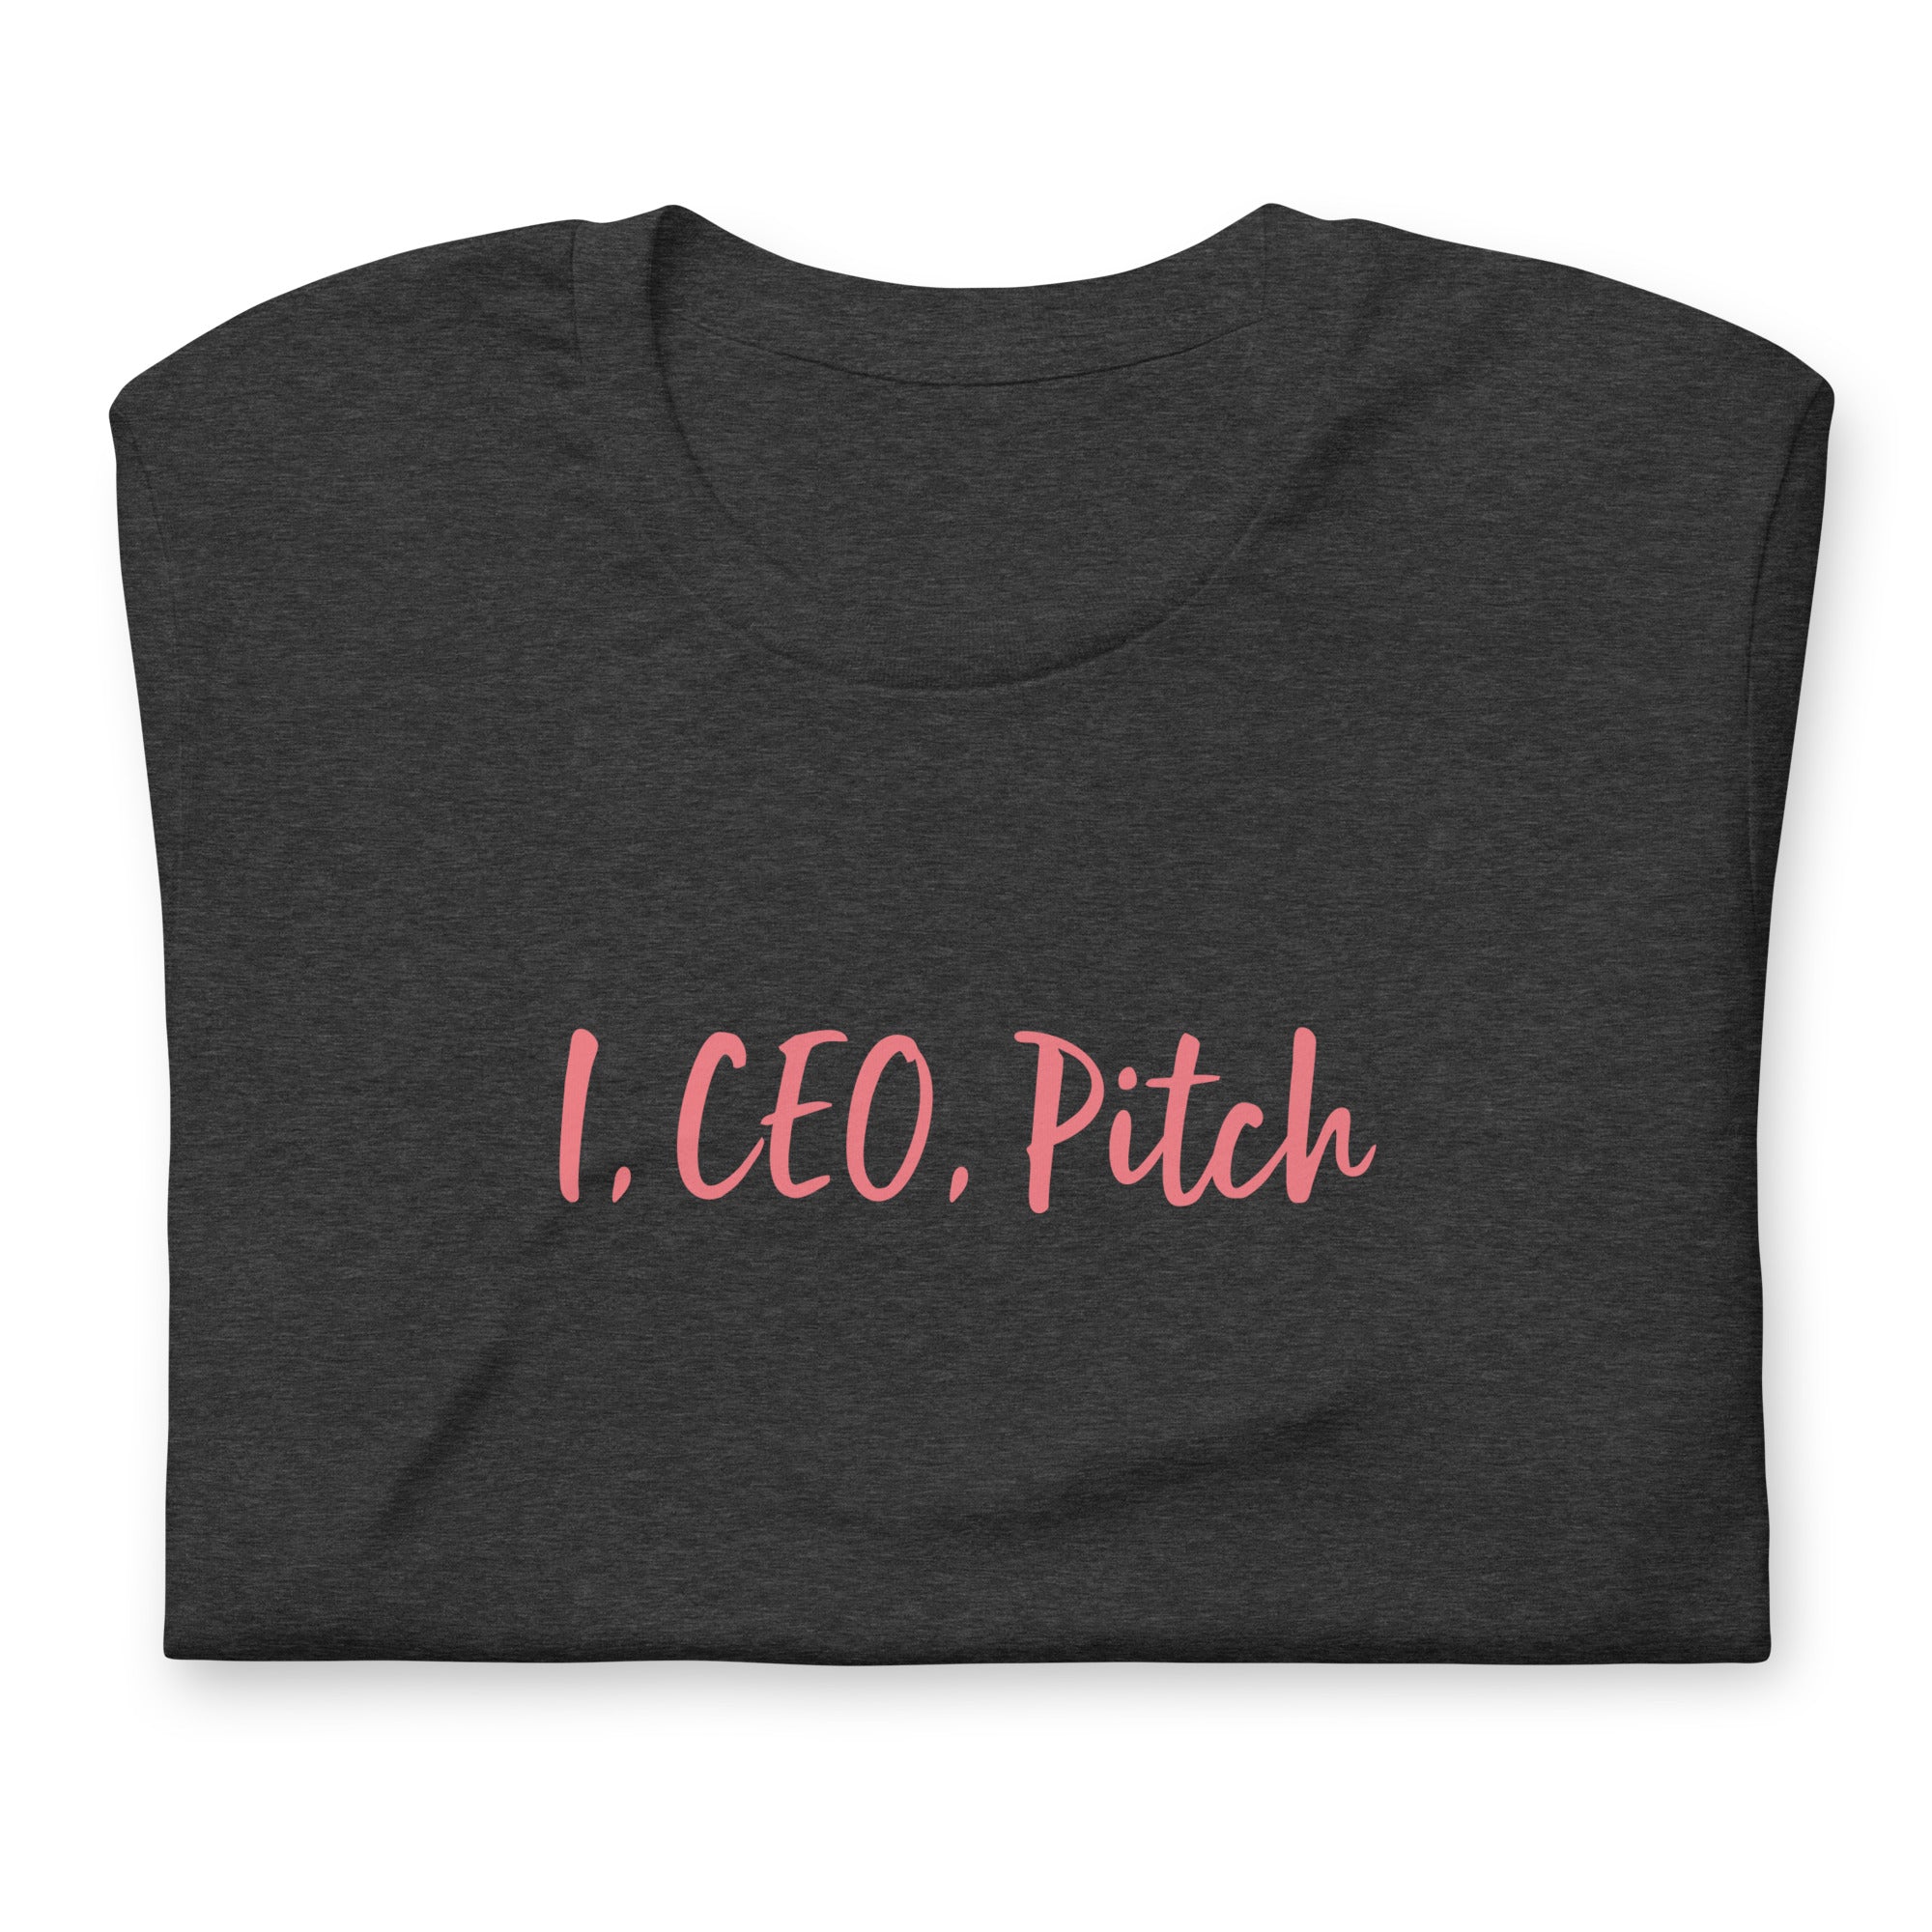 I, CEO, Pitch Premium Unisex t-shirt